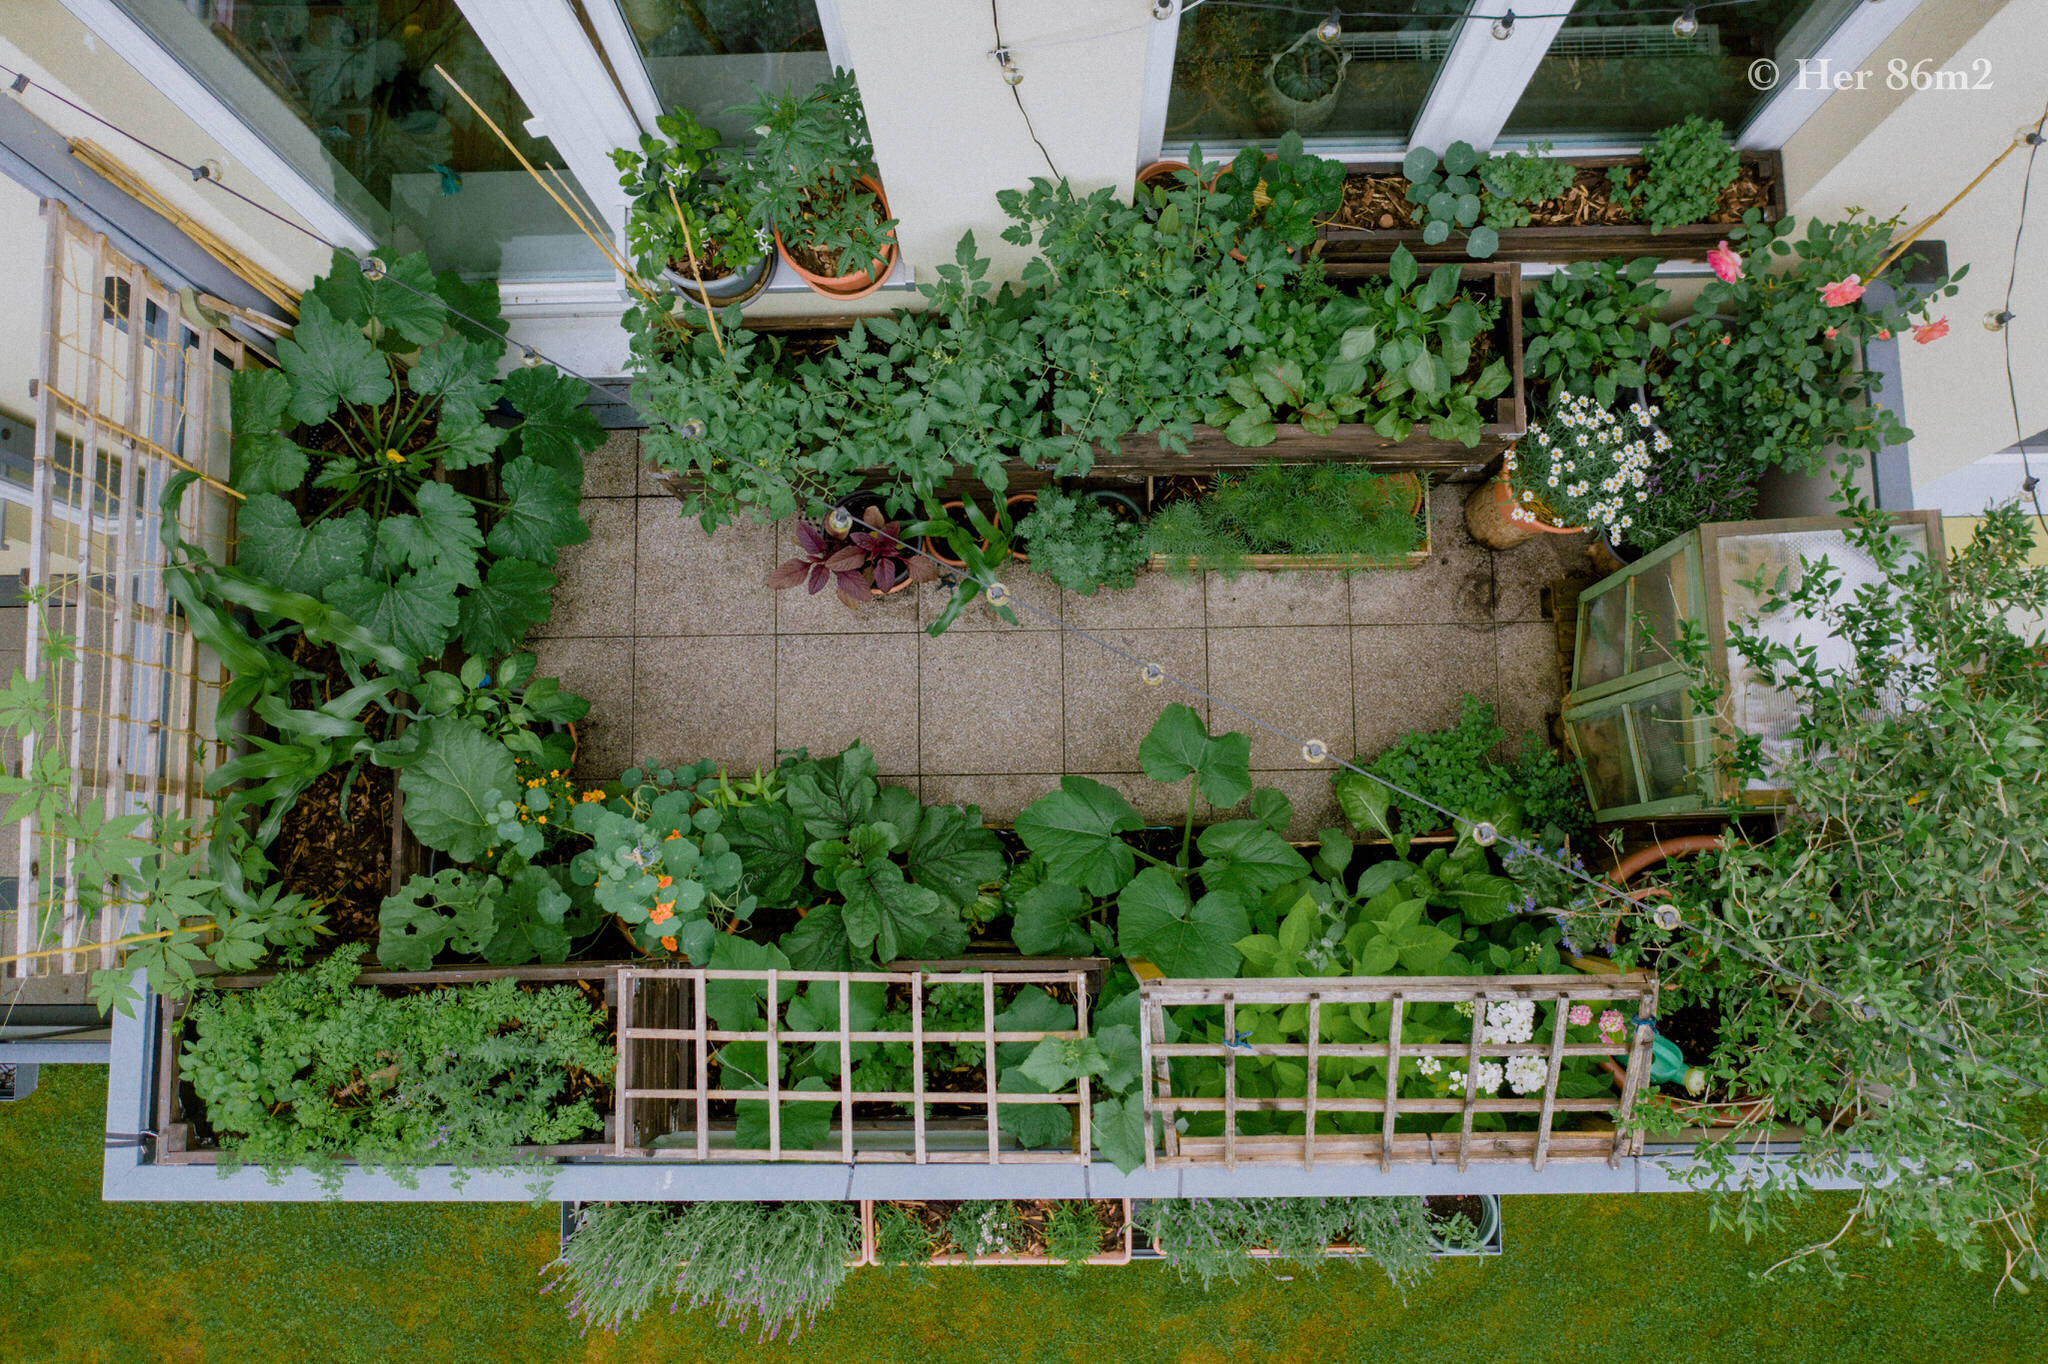 Her 86m2 - My 8m² Balcony Vegetable Garden | A Wonderful 200 Day Journey 172b.jpg